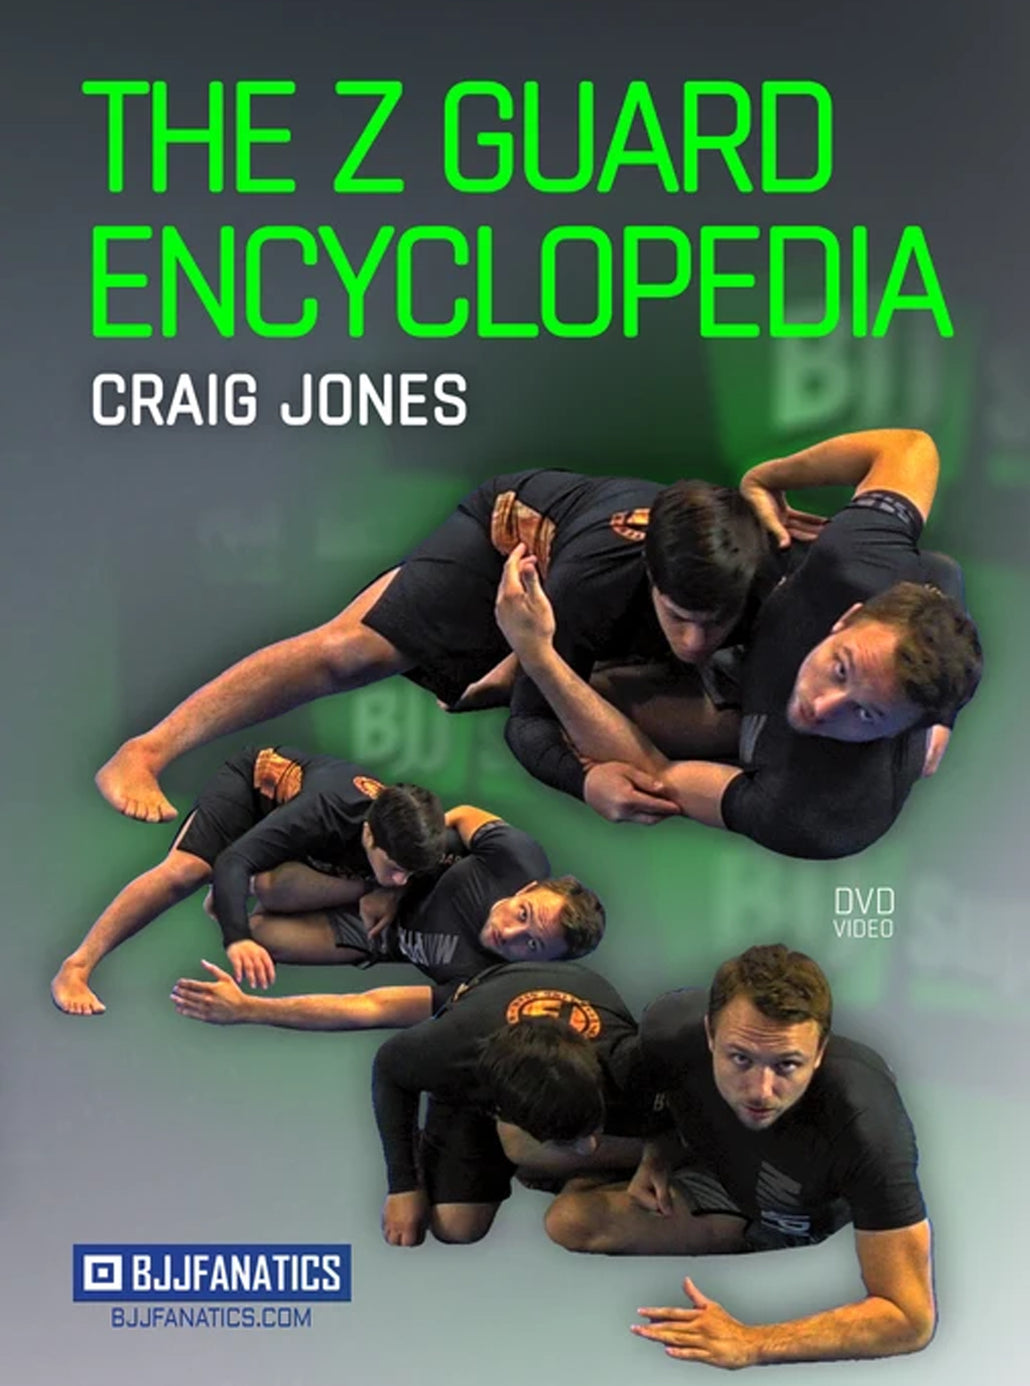 The Z Guard Encyclopedia by Craig Jones